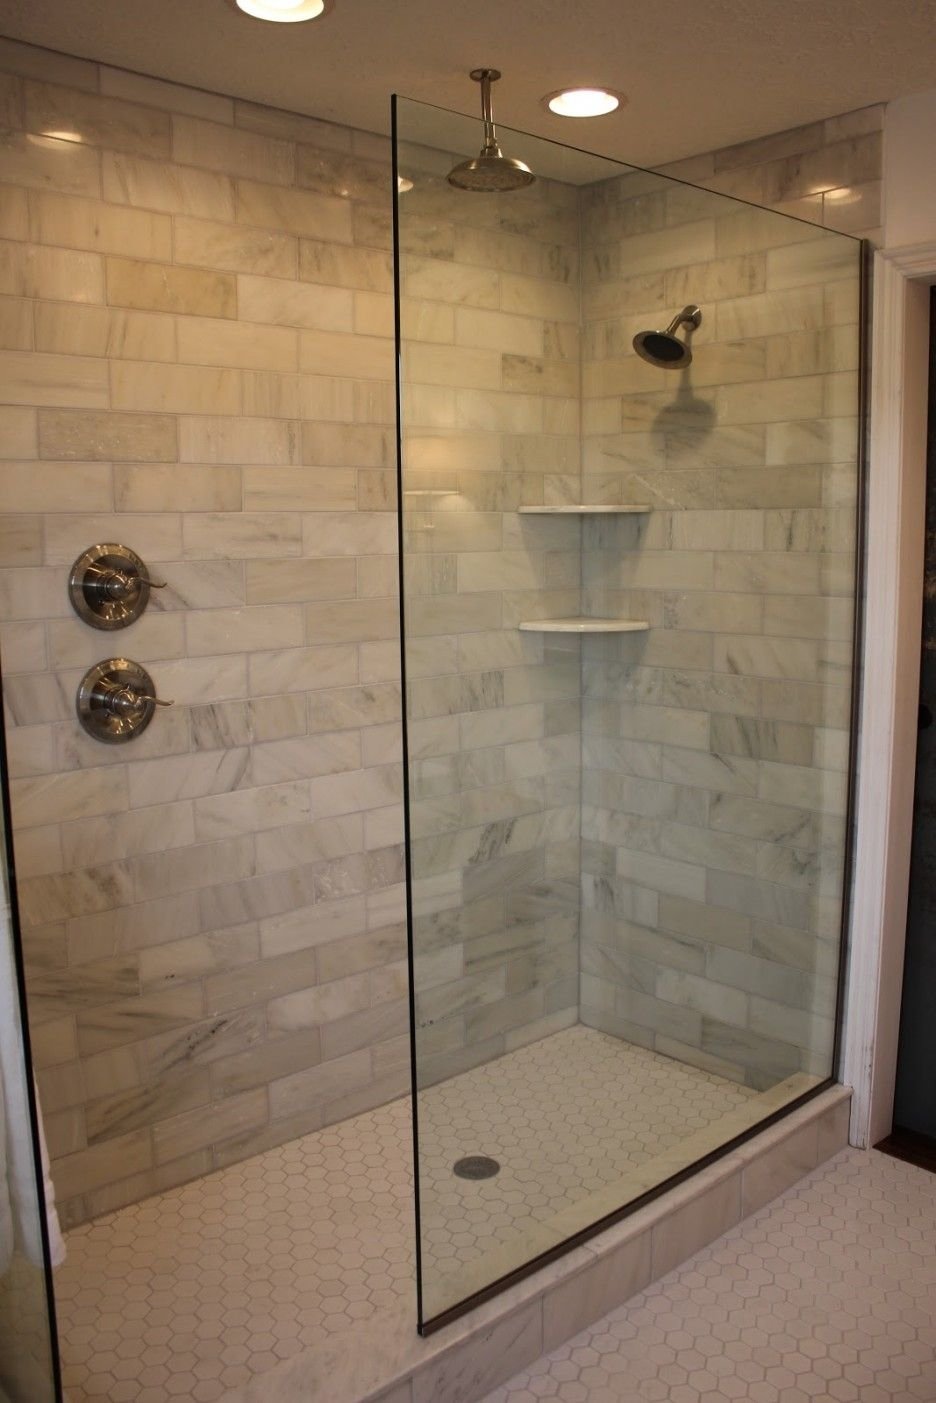 10 Wonderful Walk In Shower Tile Ideas doorless walk in shower designs shower handle on separate wall 2022